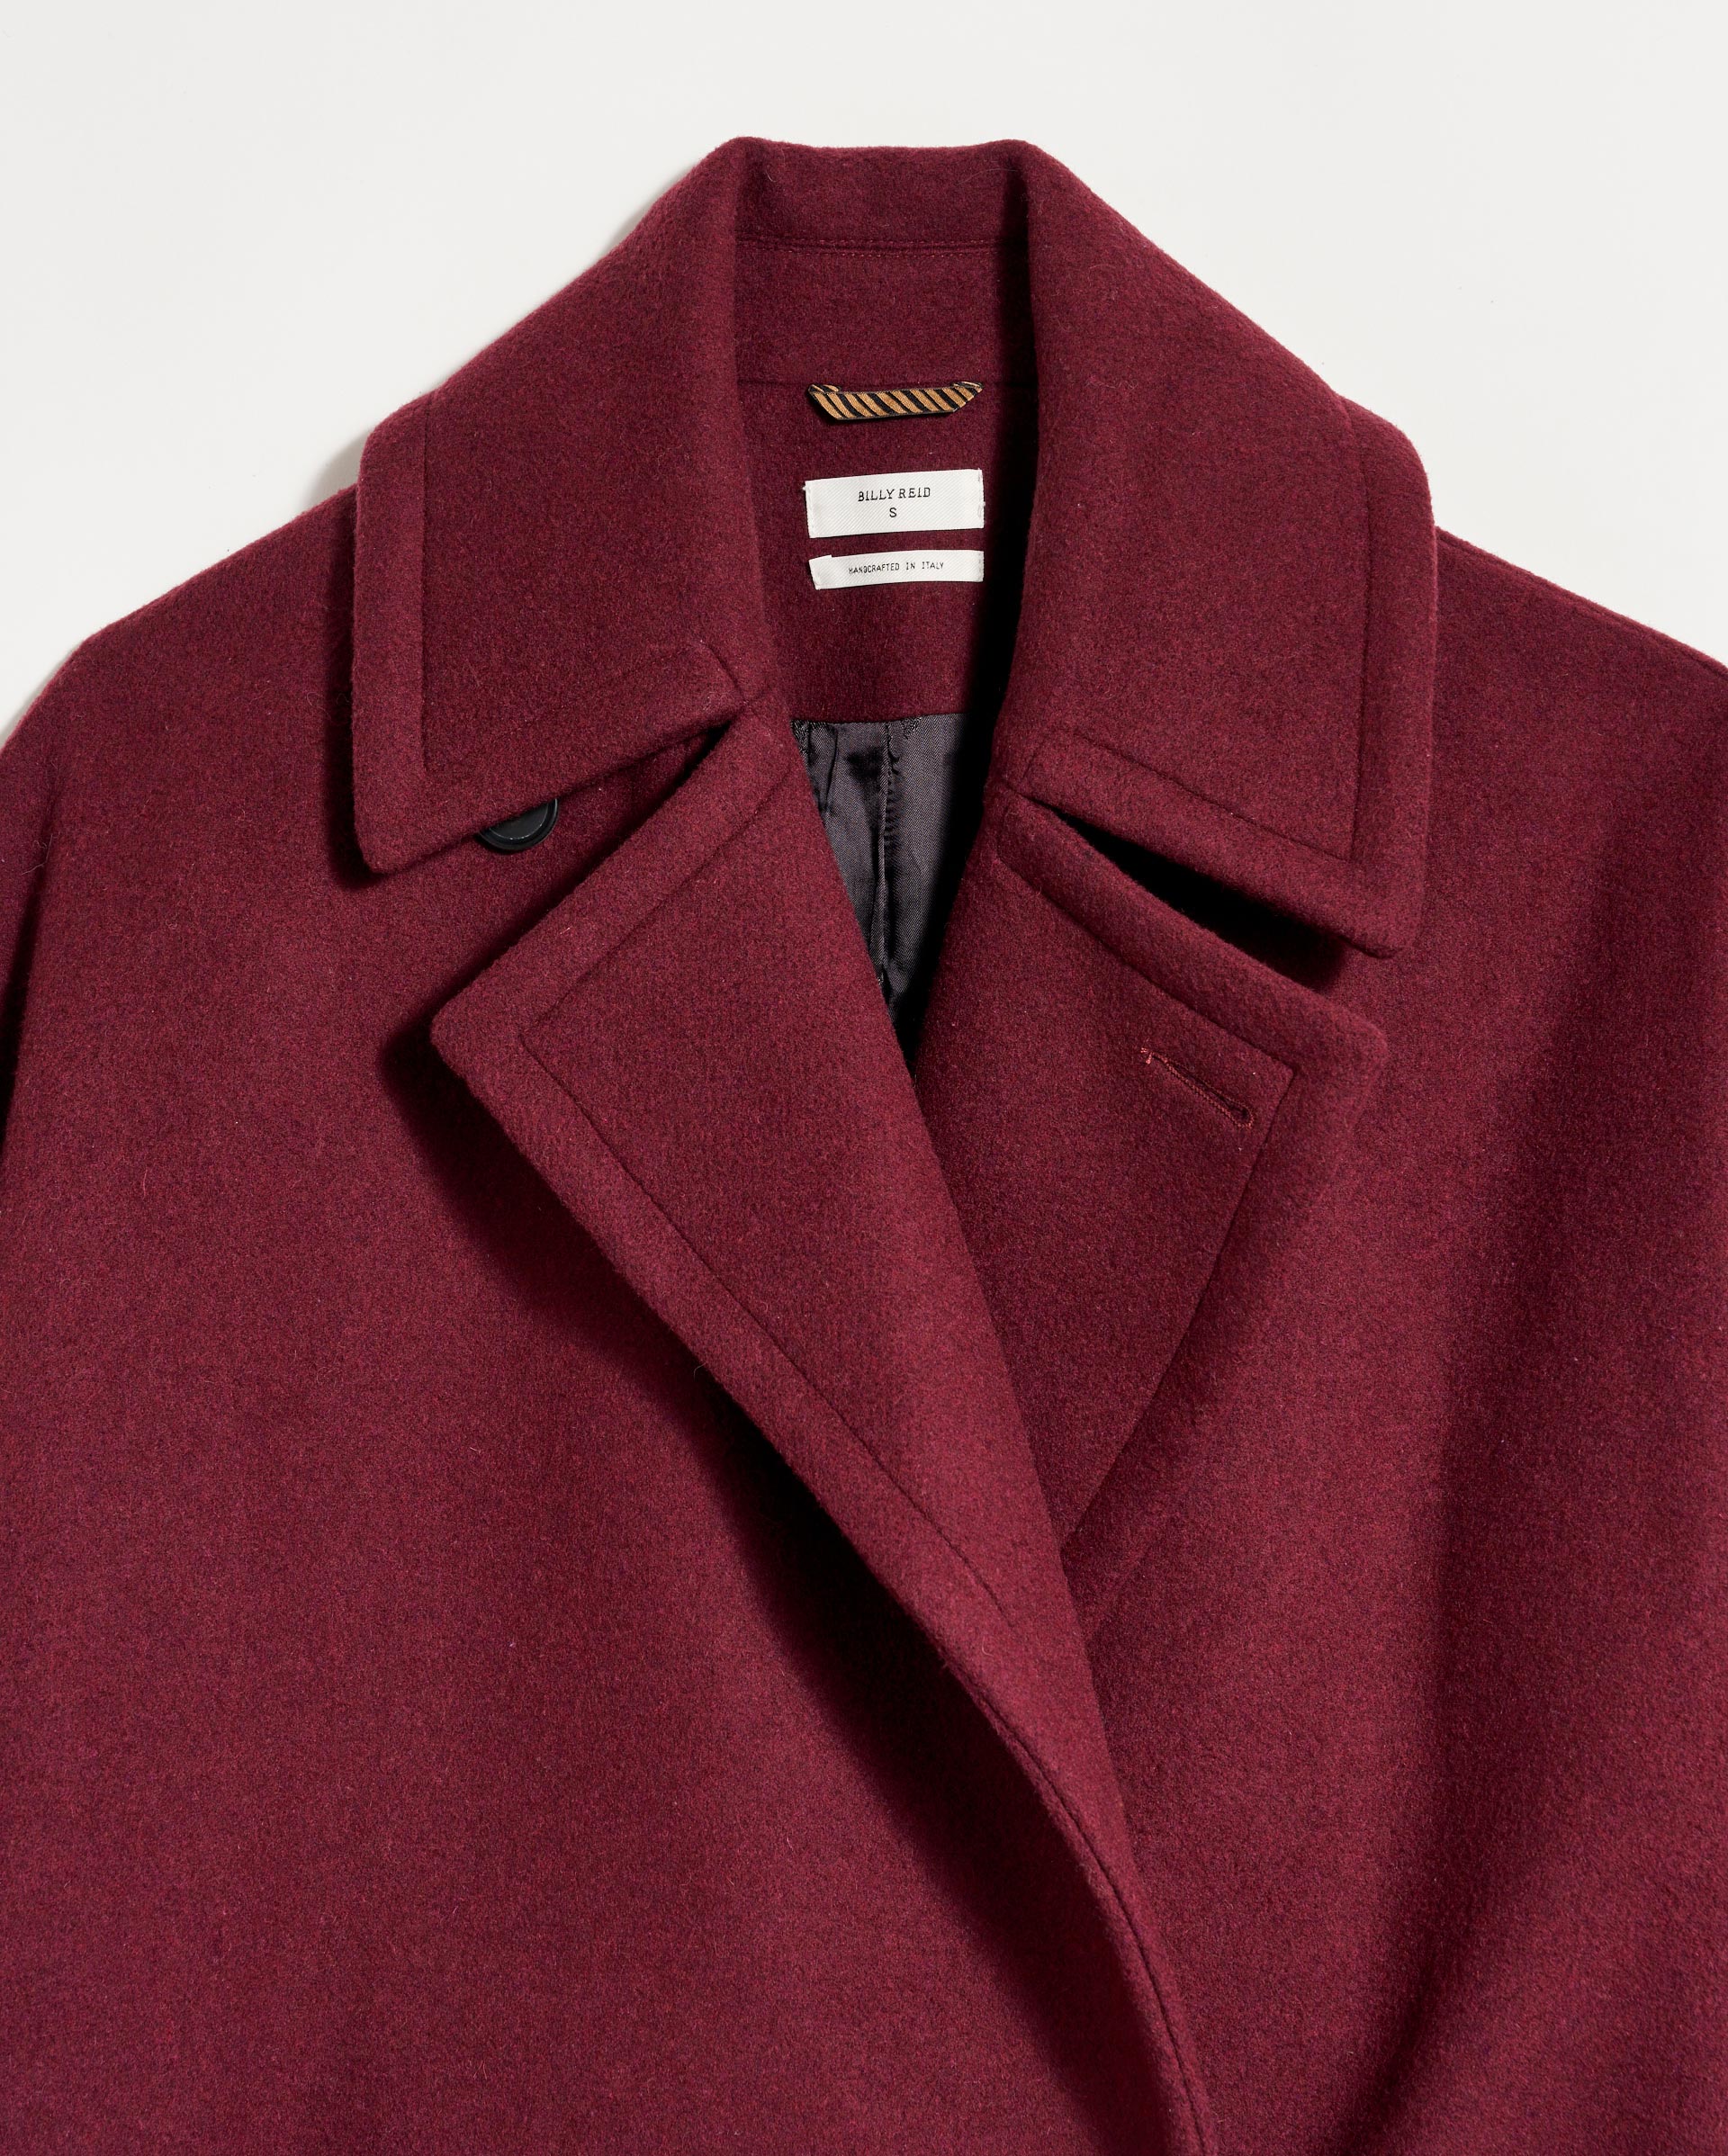 Long Wool Blend Coat, AVENUE No.29